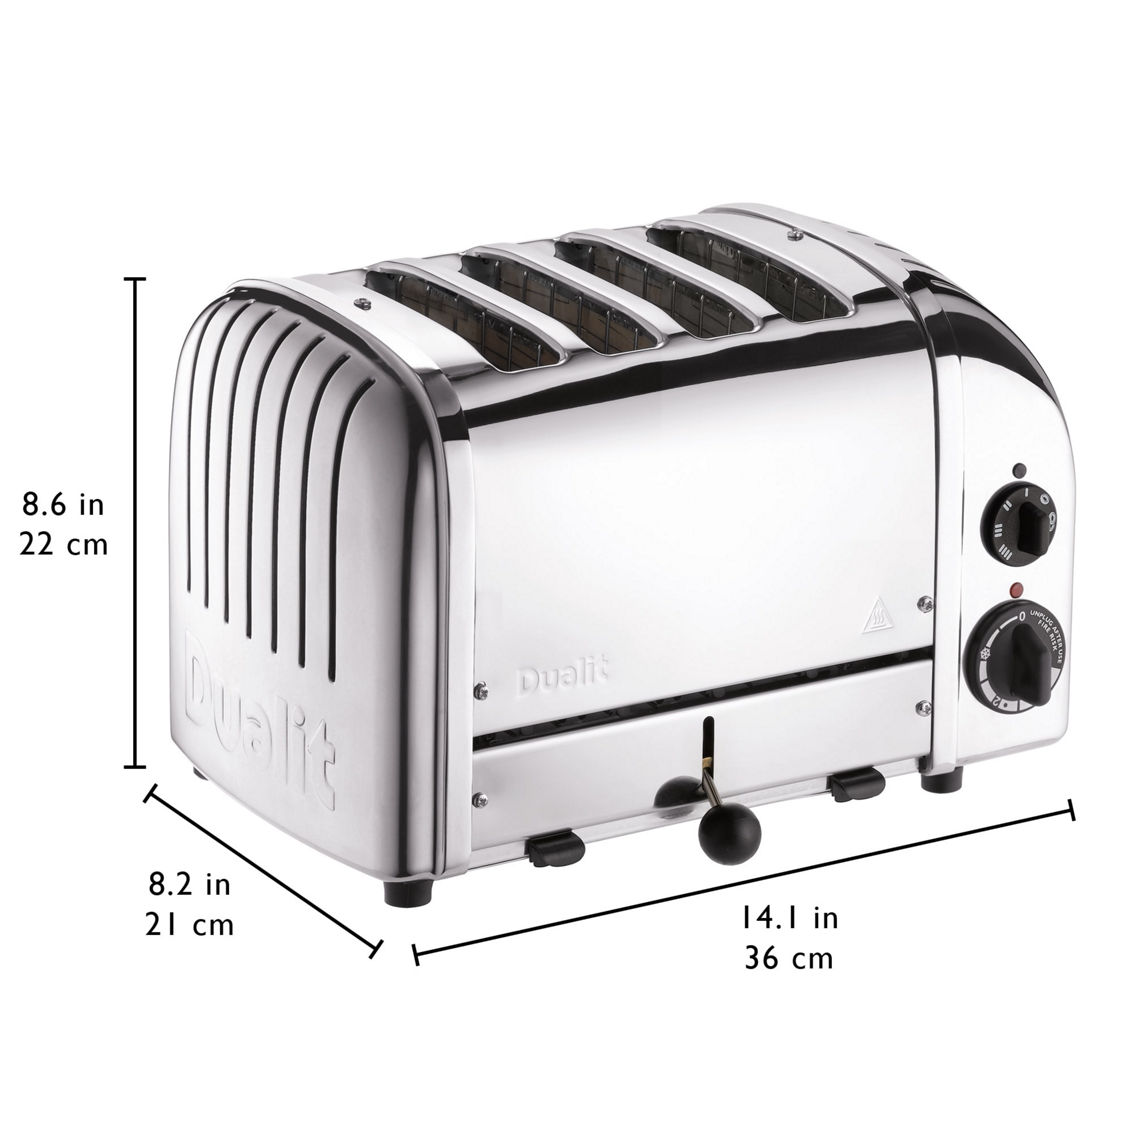 Dualit 4 Slice NewGen Toaster, Matt Black - Image 2 of 5